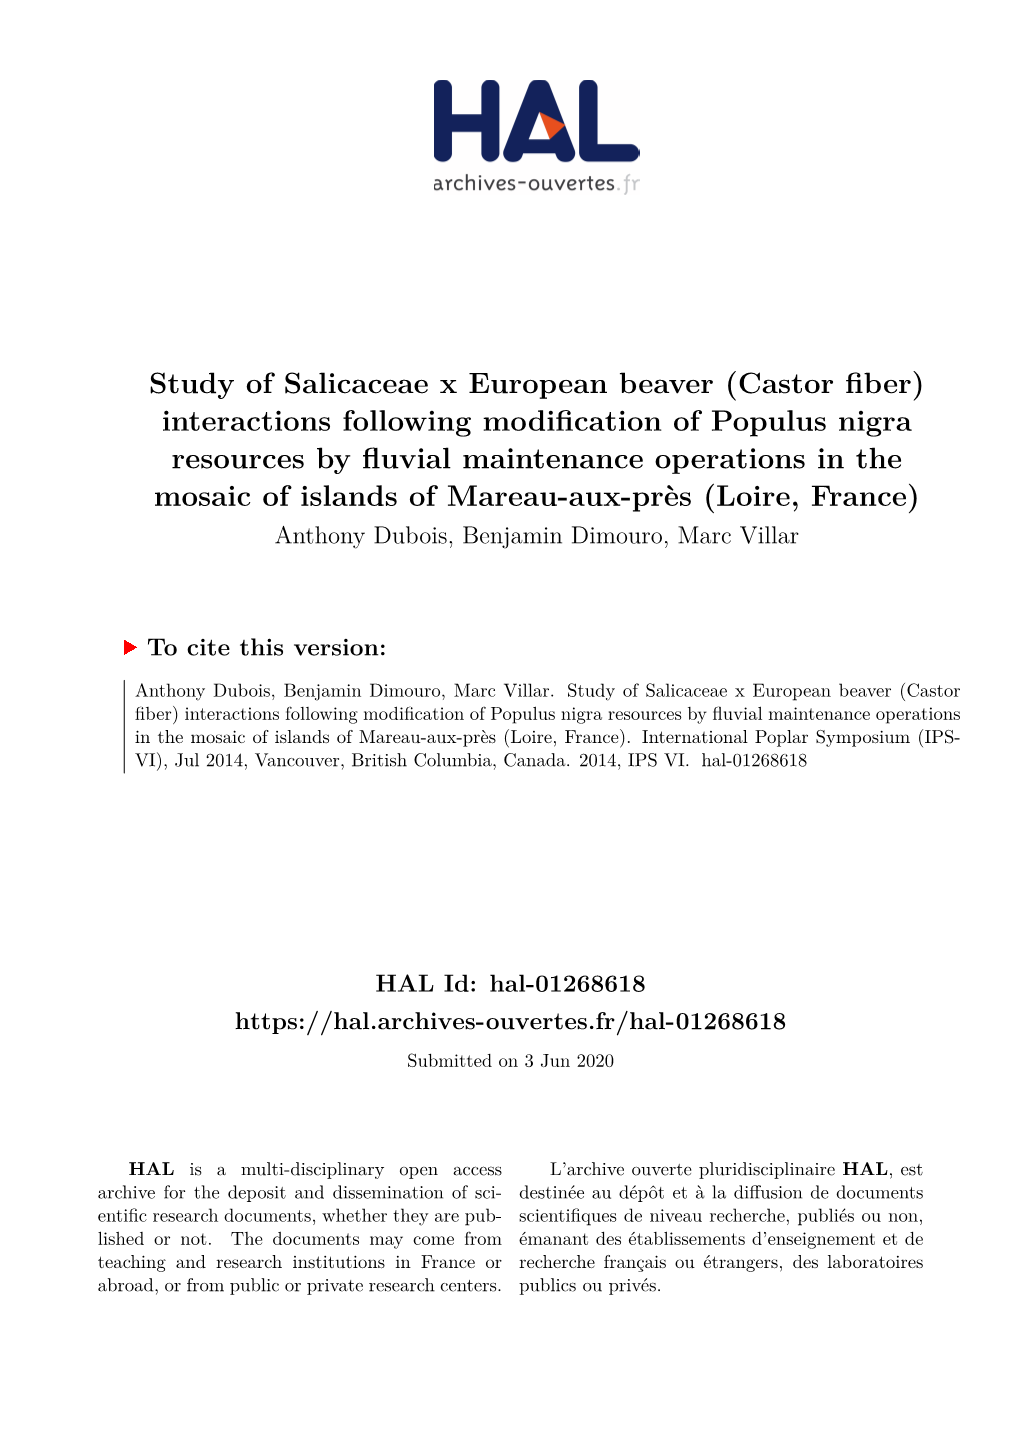 Study of Salicaceae X European Beaver